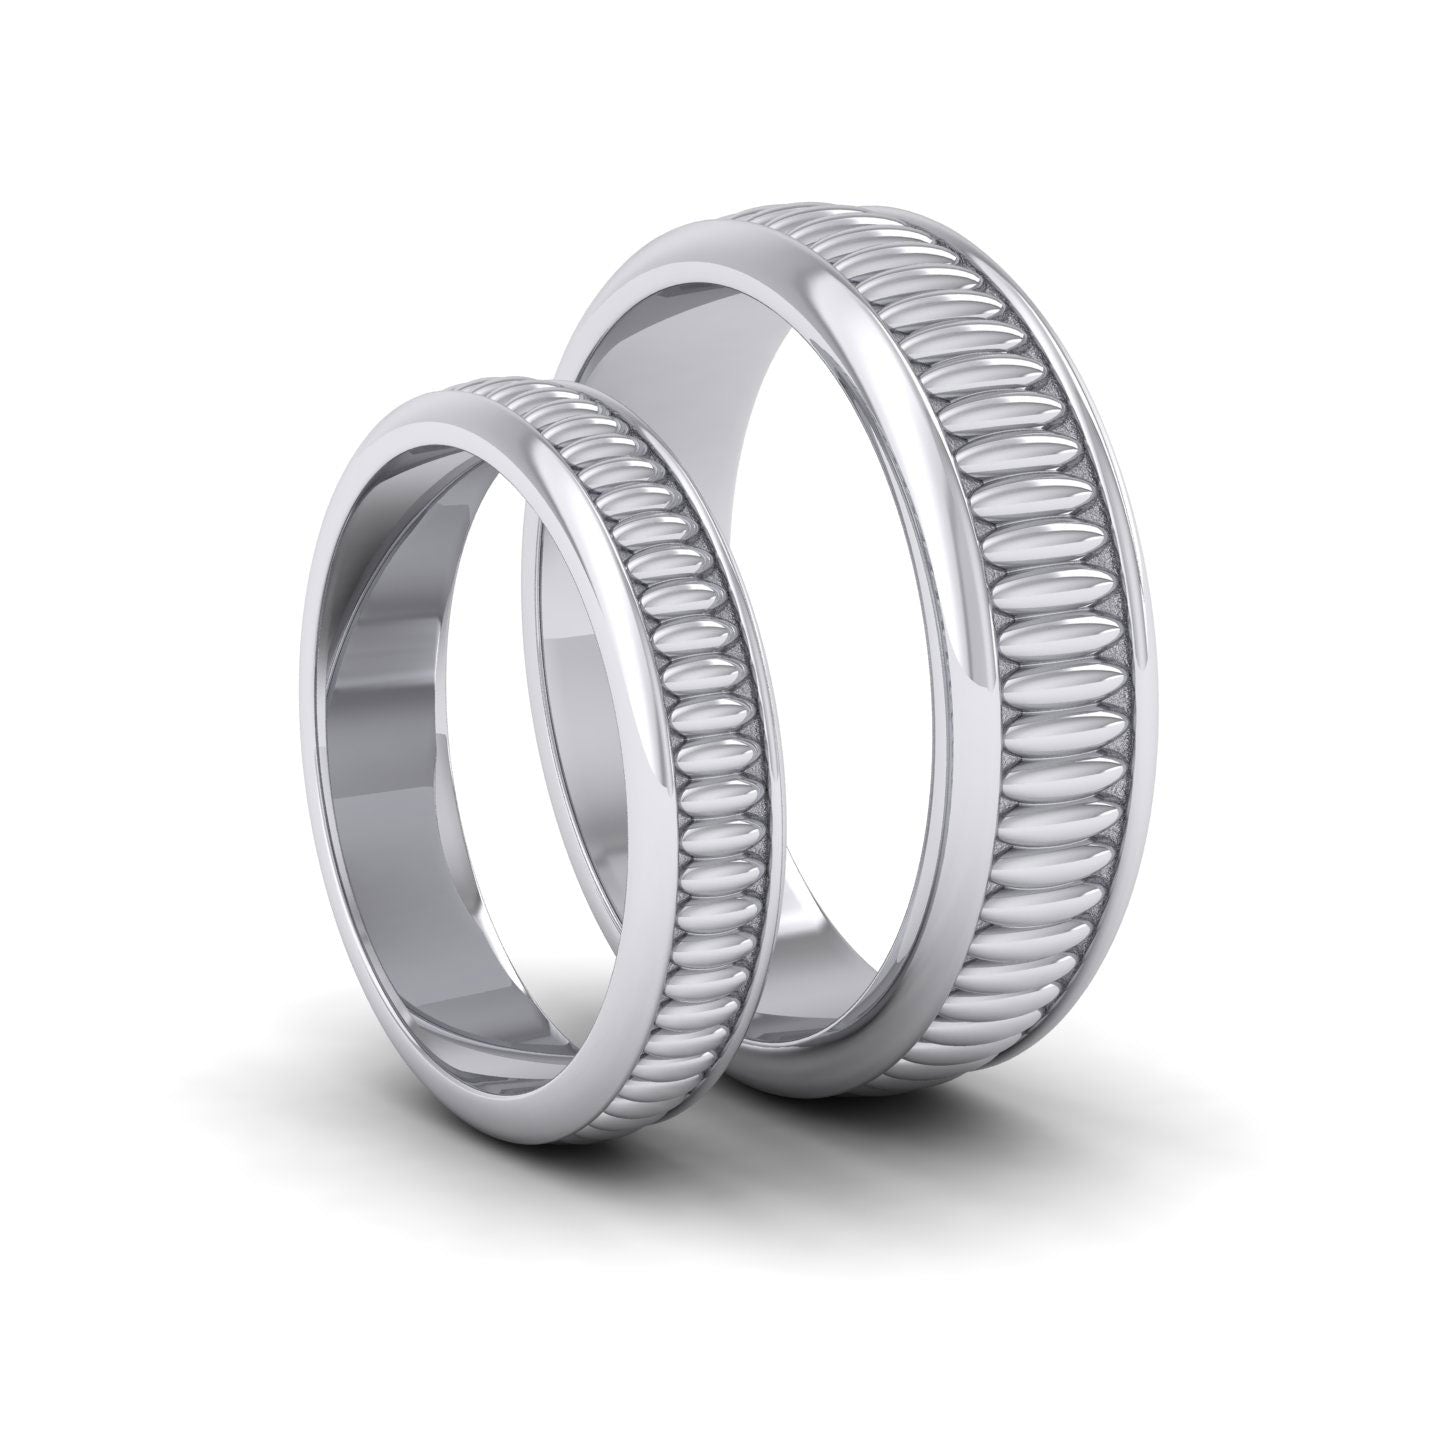 Raised Oval Bump And Edged 950 Platinum 6mm Wedding Ring